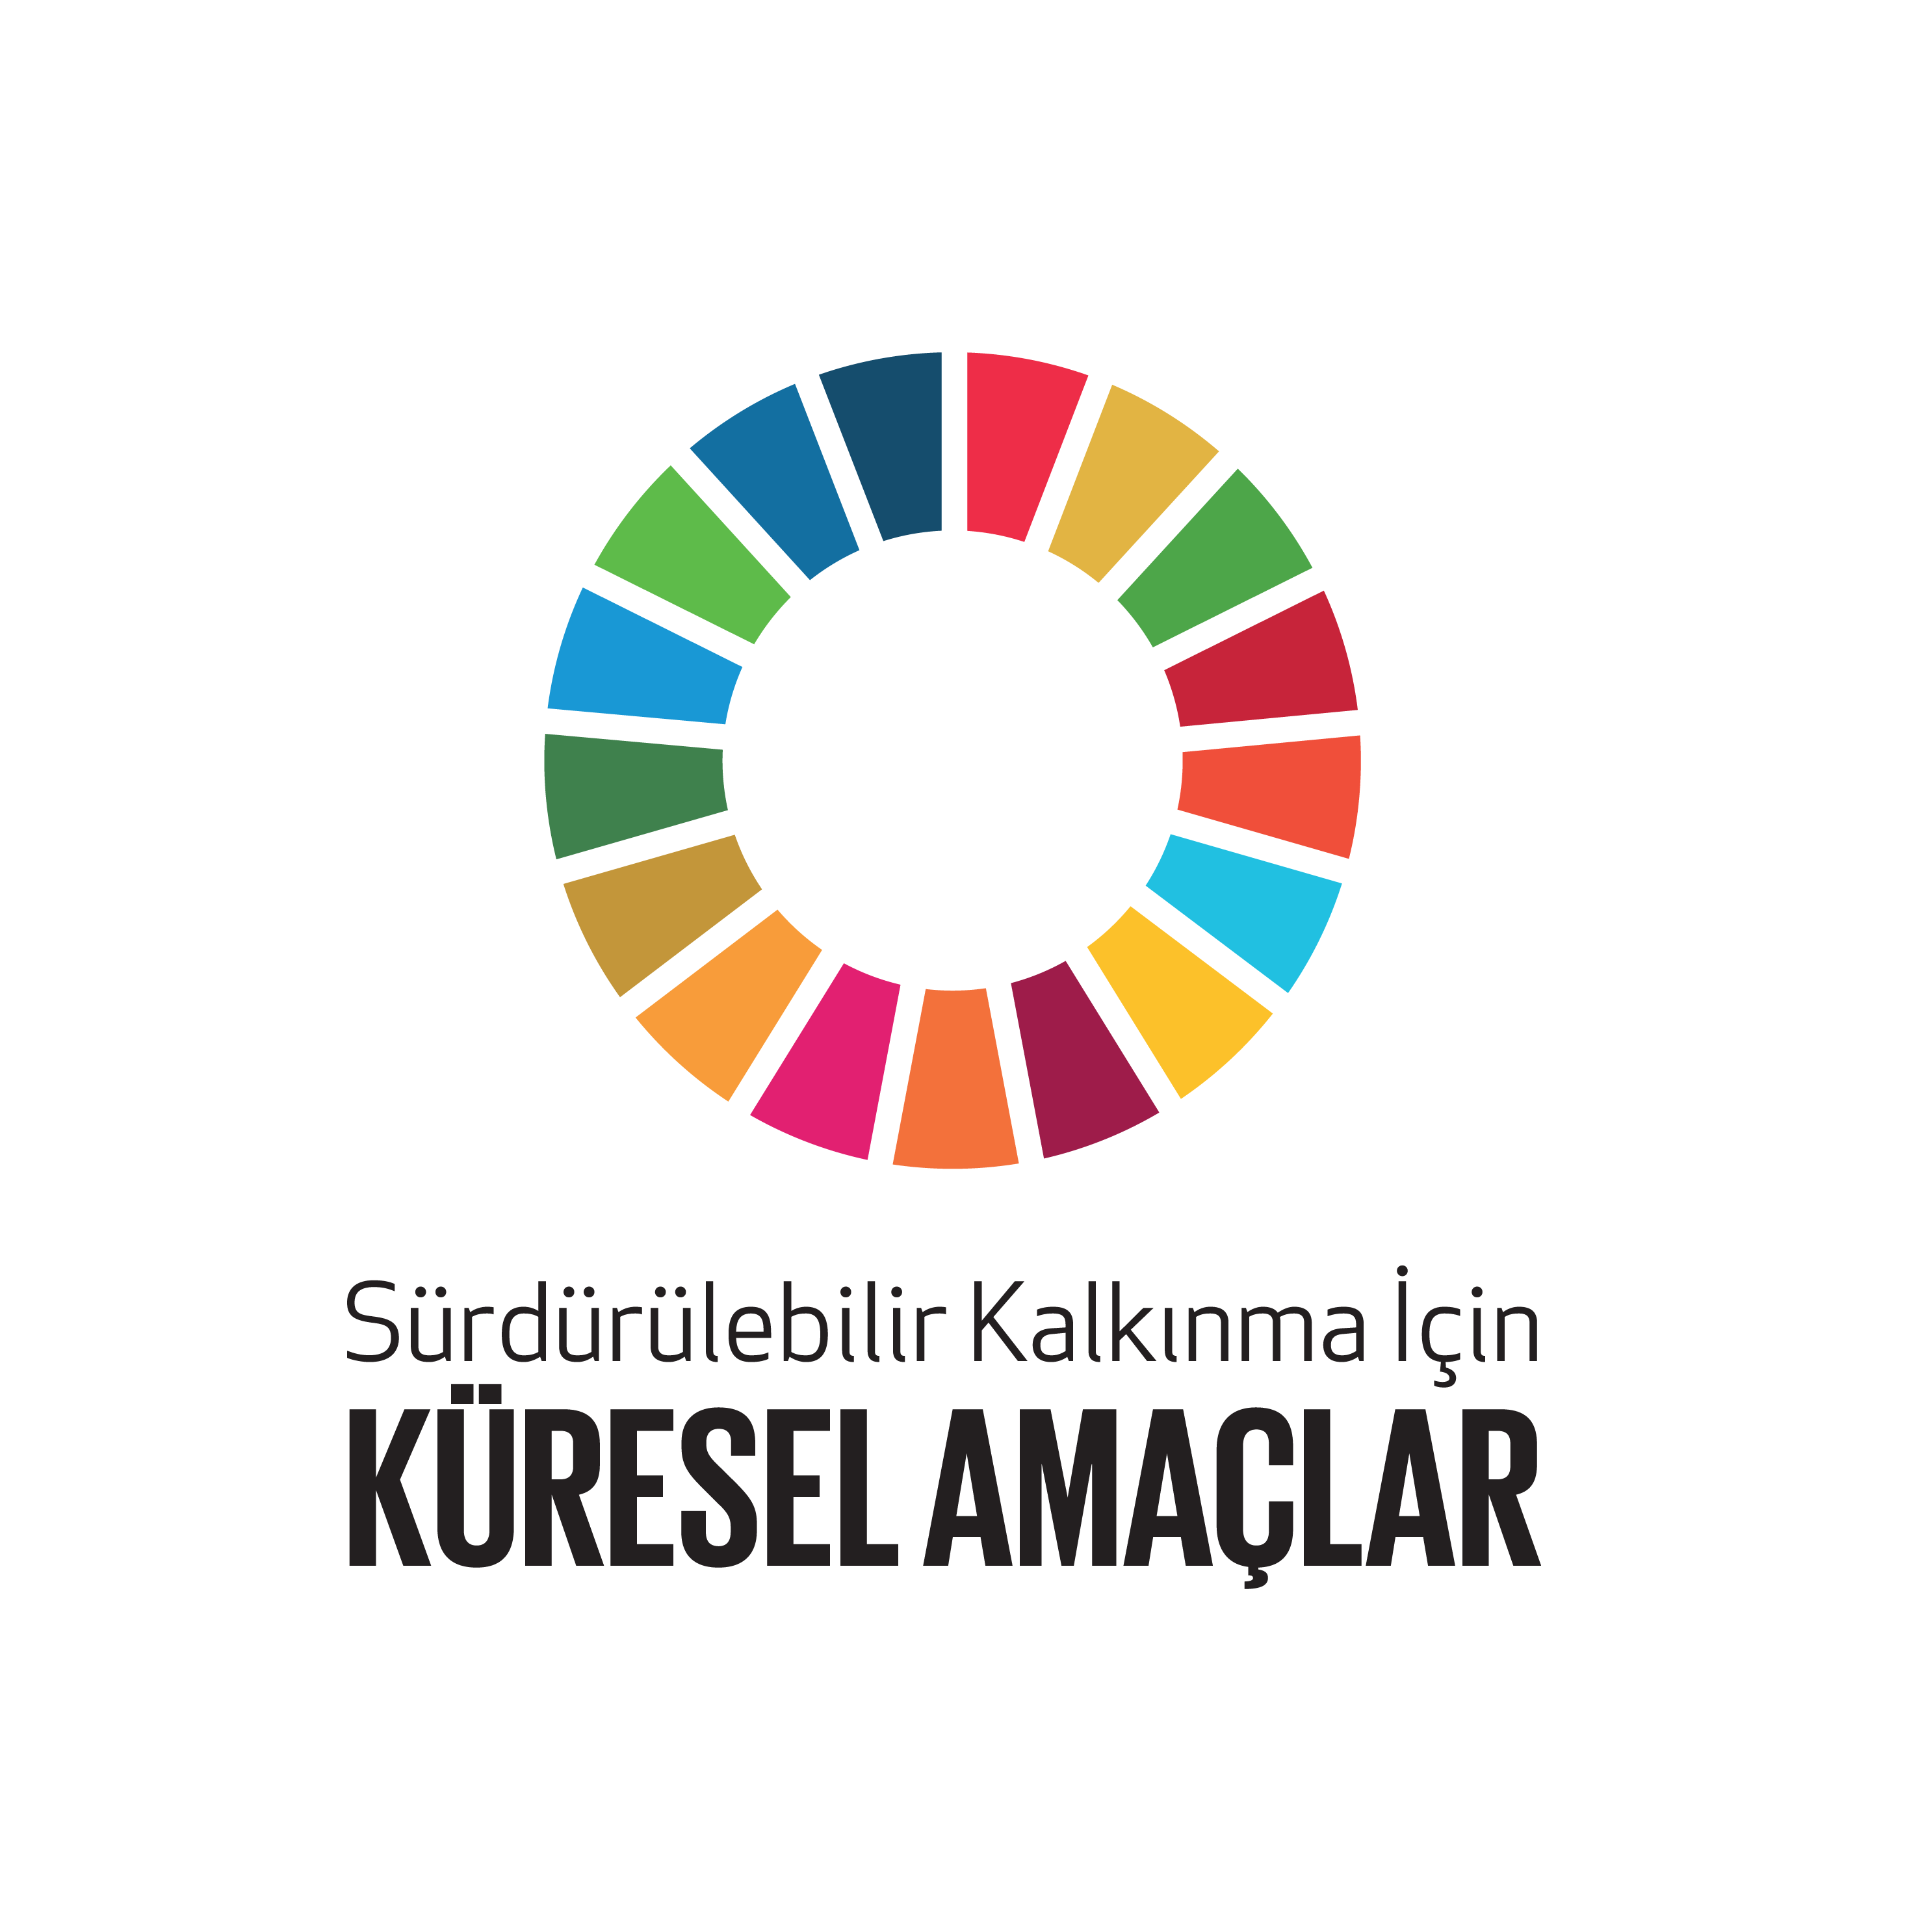 UN Sustainable Development Goals | GCA